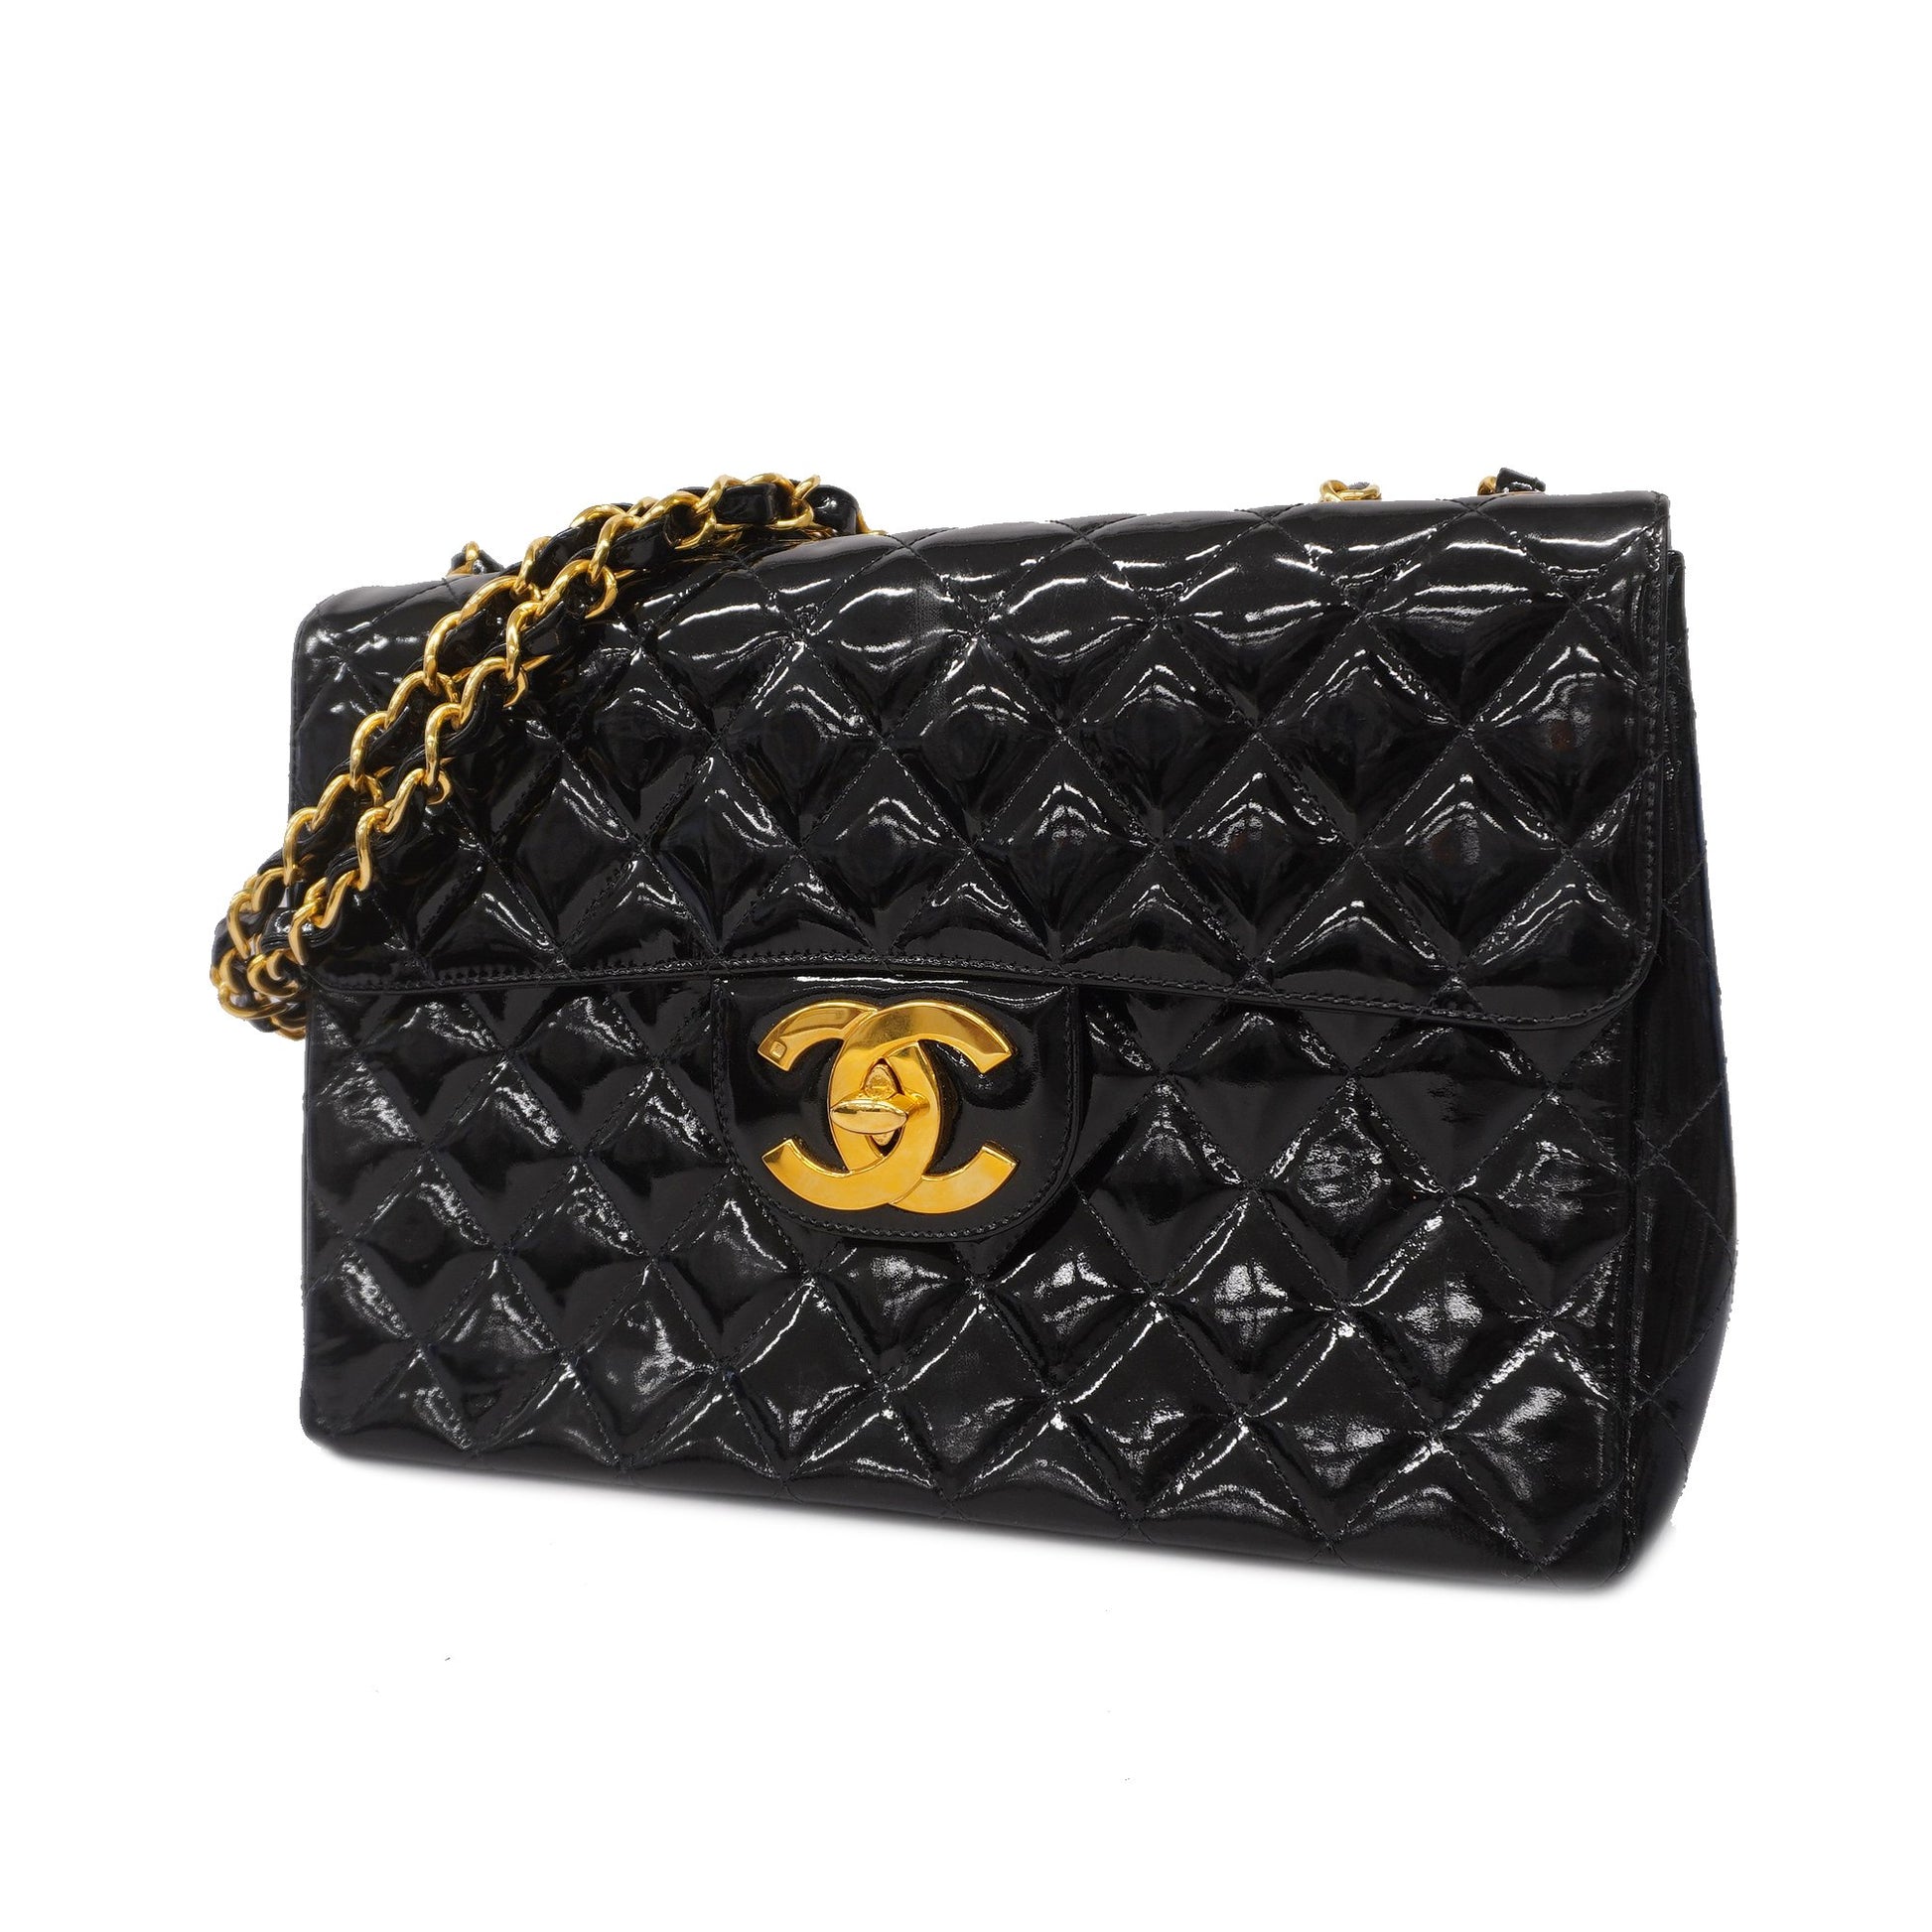 Chanel Big Matelasse W Chain Women's Patent Leather Shoulder Bag Black